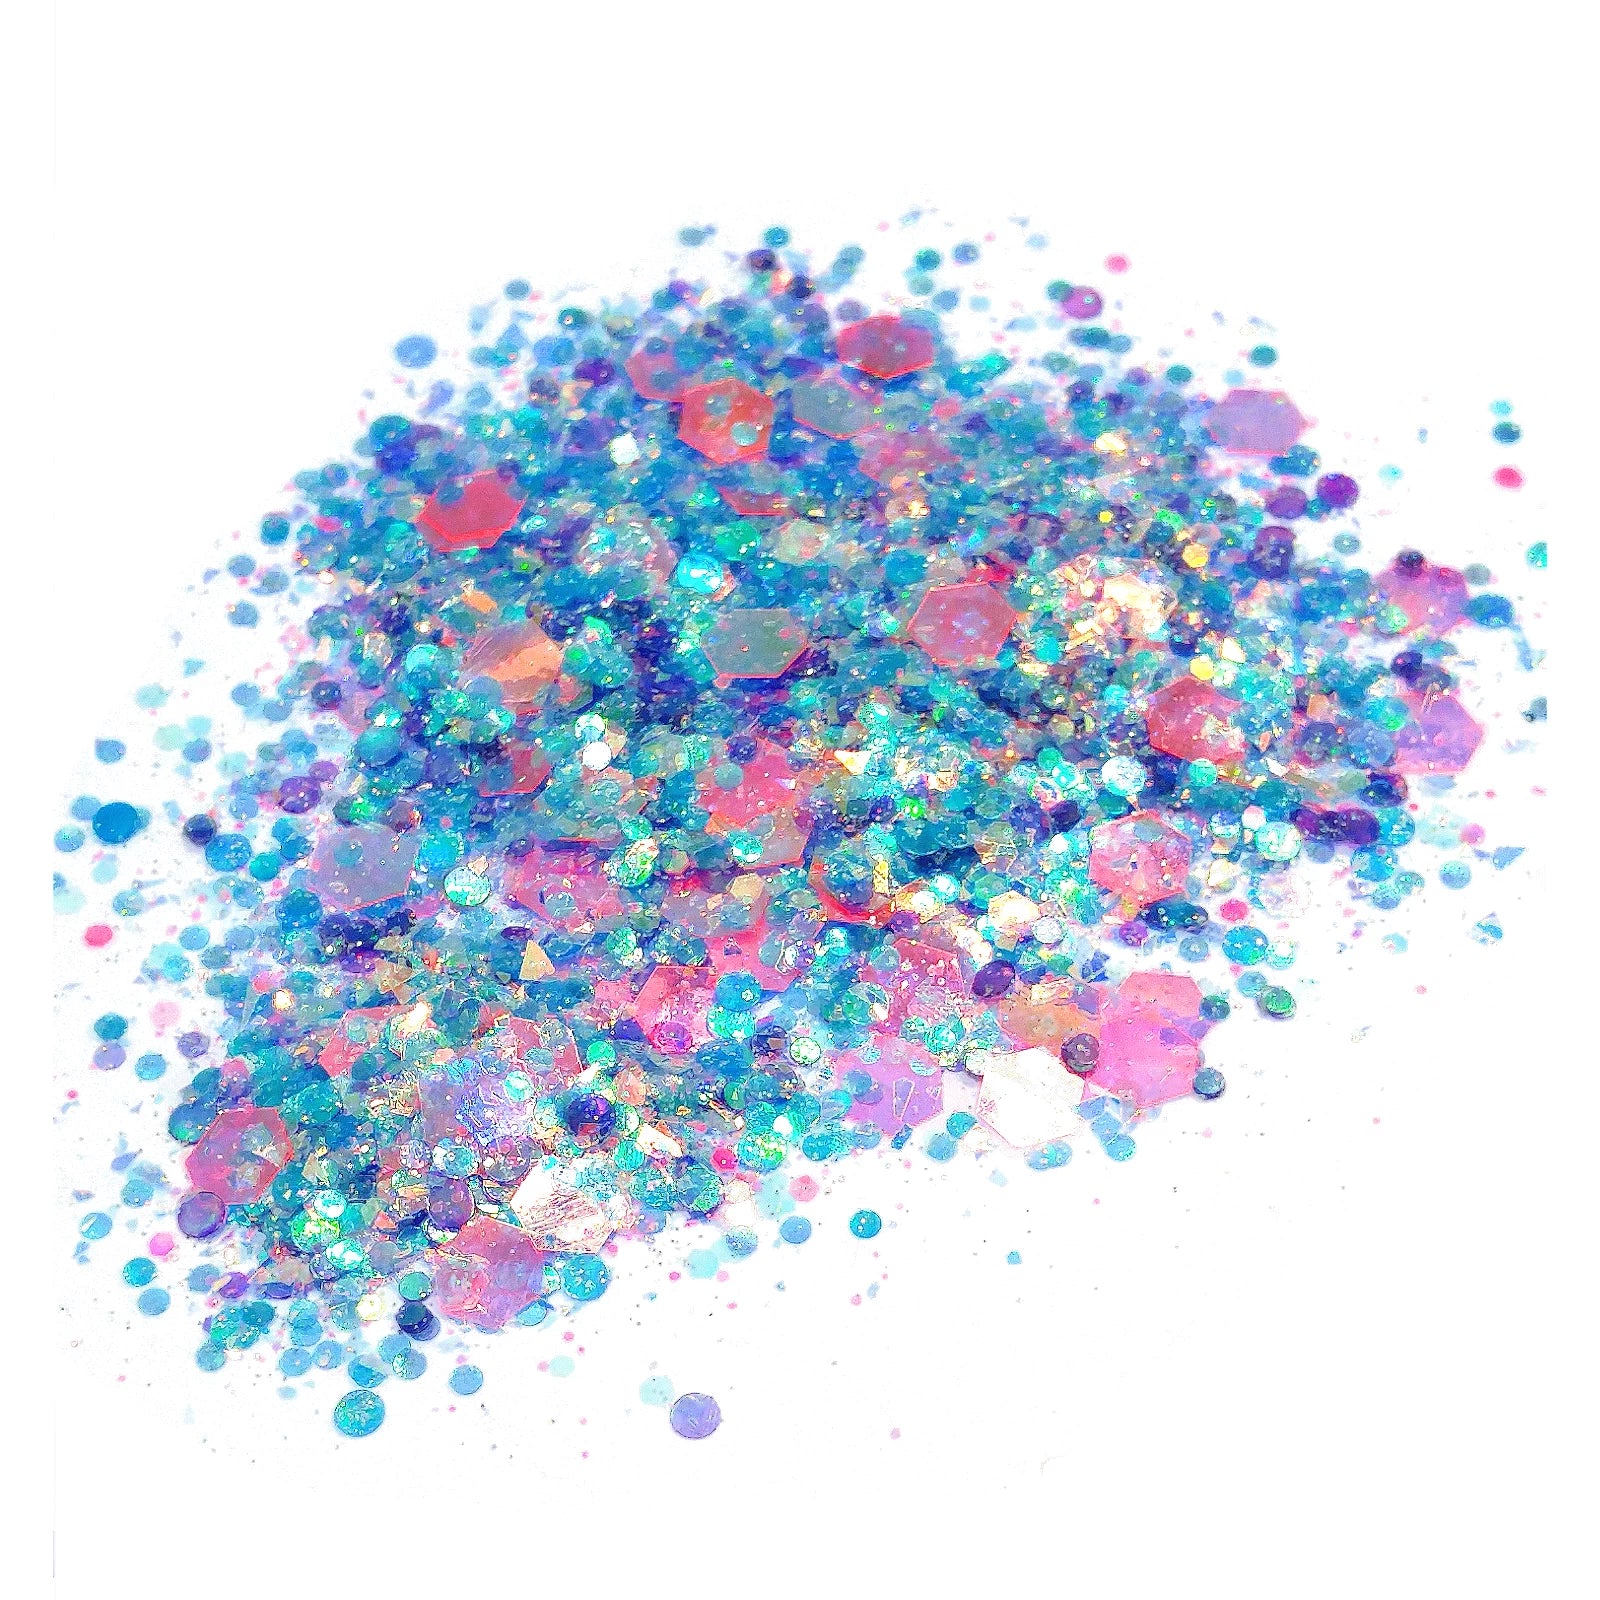 Pink and Blue Iridescent Glitter Mix - Sugar Plum By Crazoulis Glitter